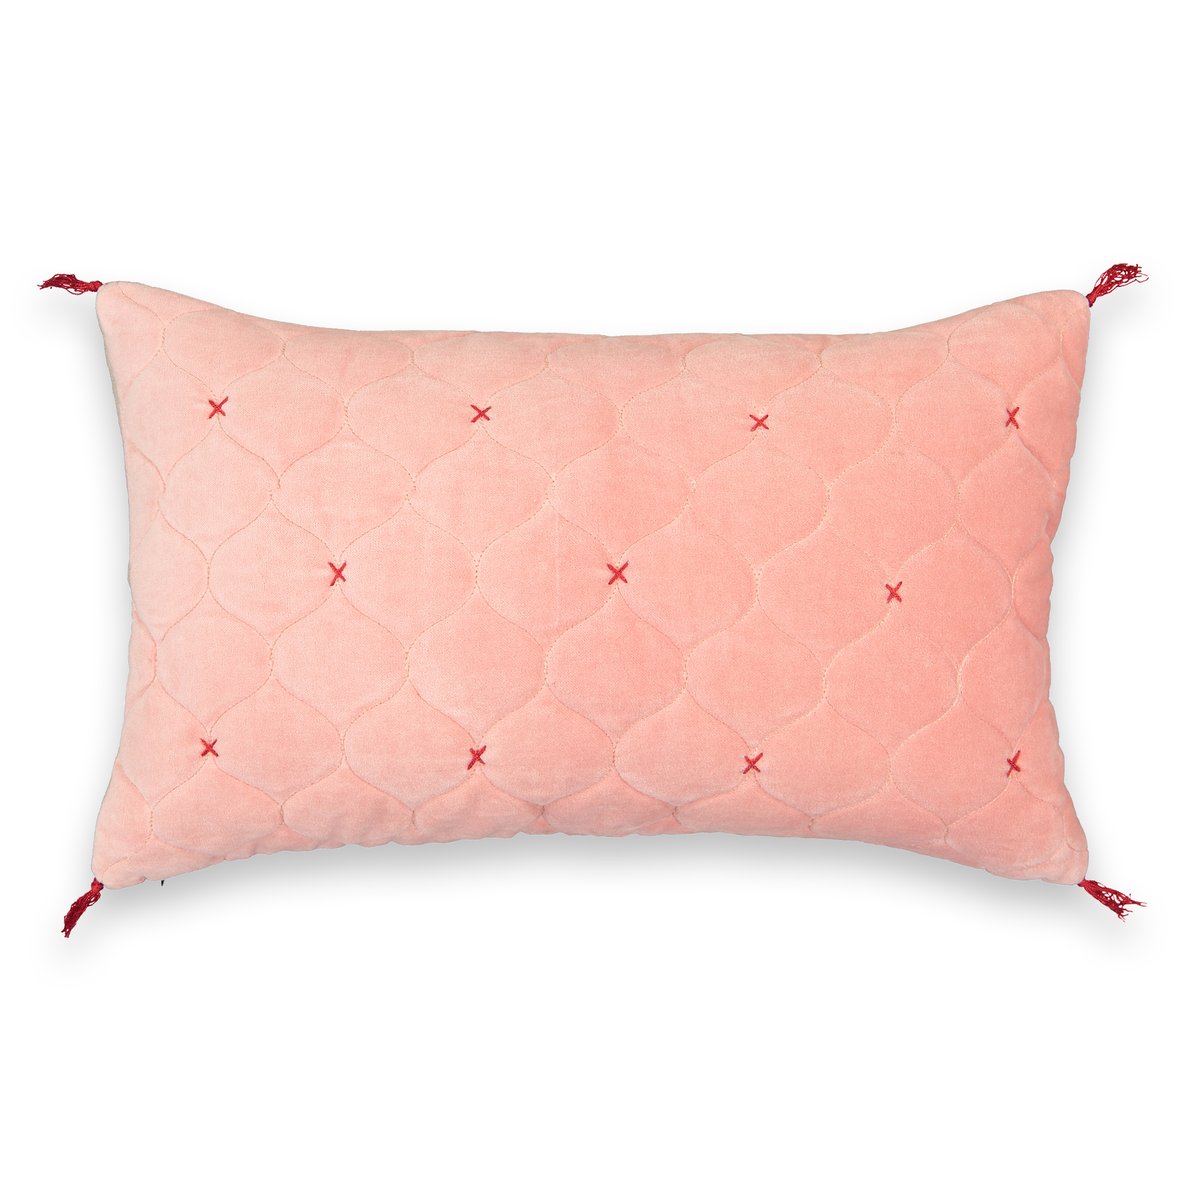 Чехол La Redoute Для подушки из велюра Chaacha 50 x 30 см розовый, размер 50 x 30 см - фото 1